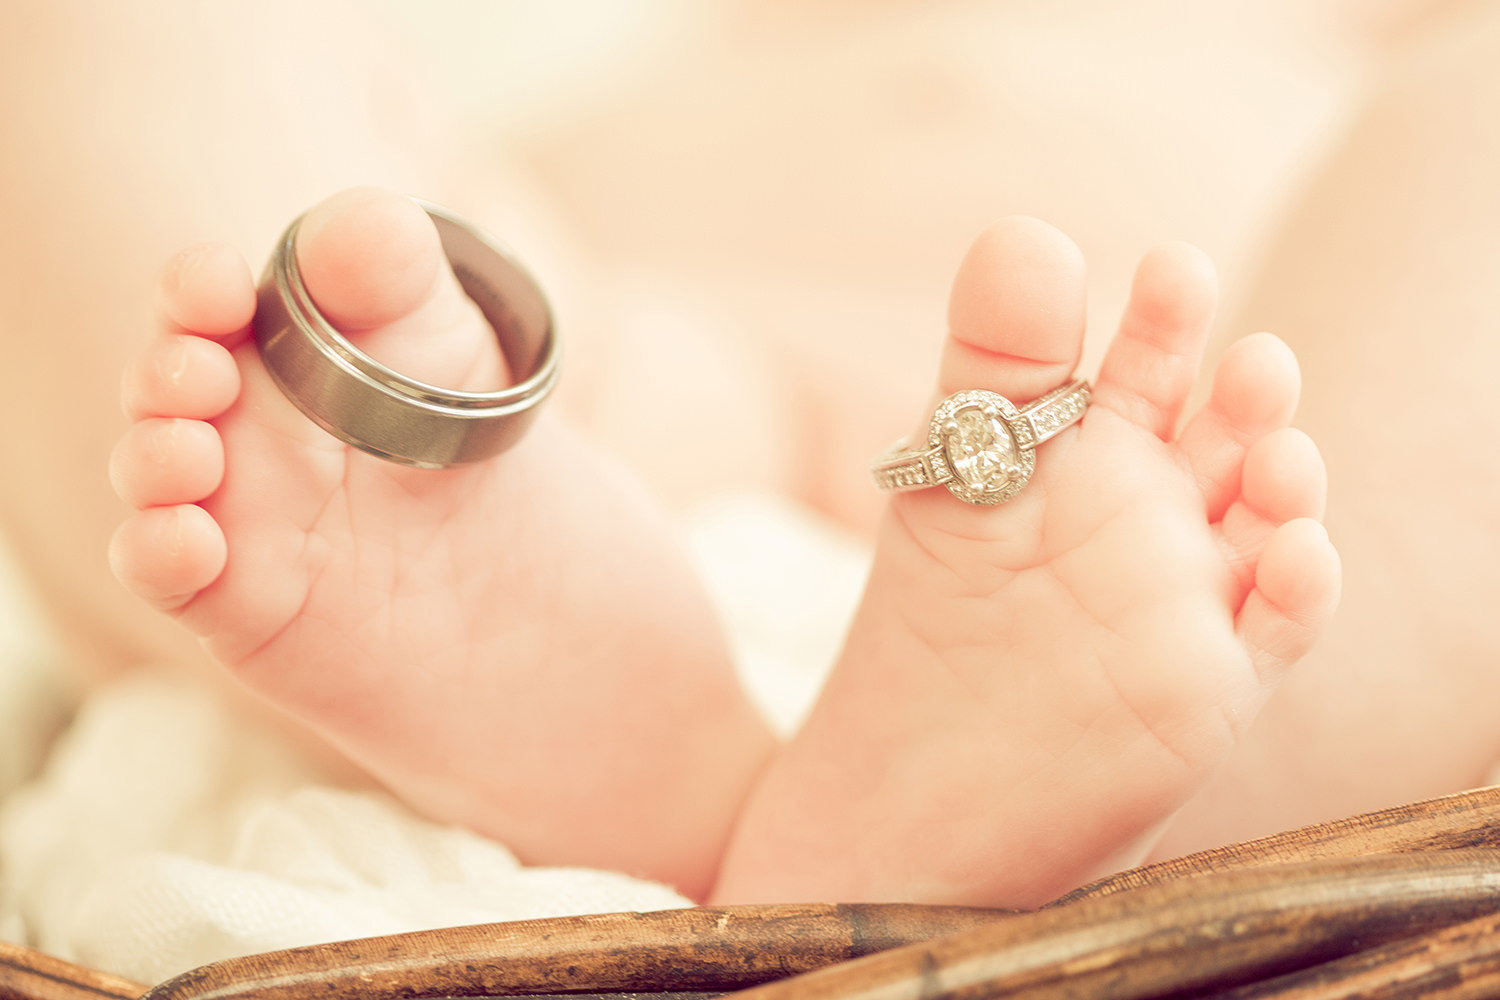 san diego newborn photography | newborns feet with parents wedding rings